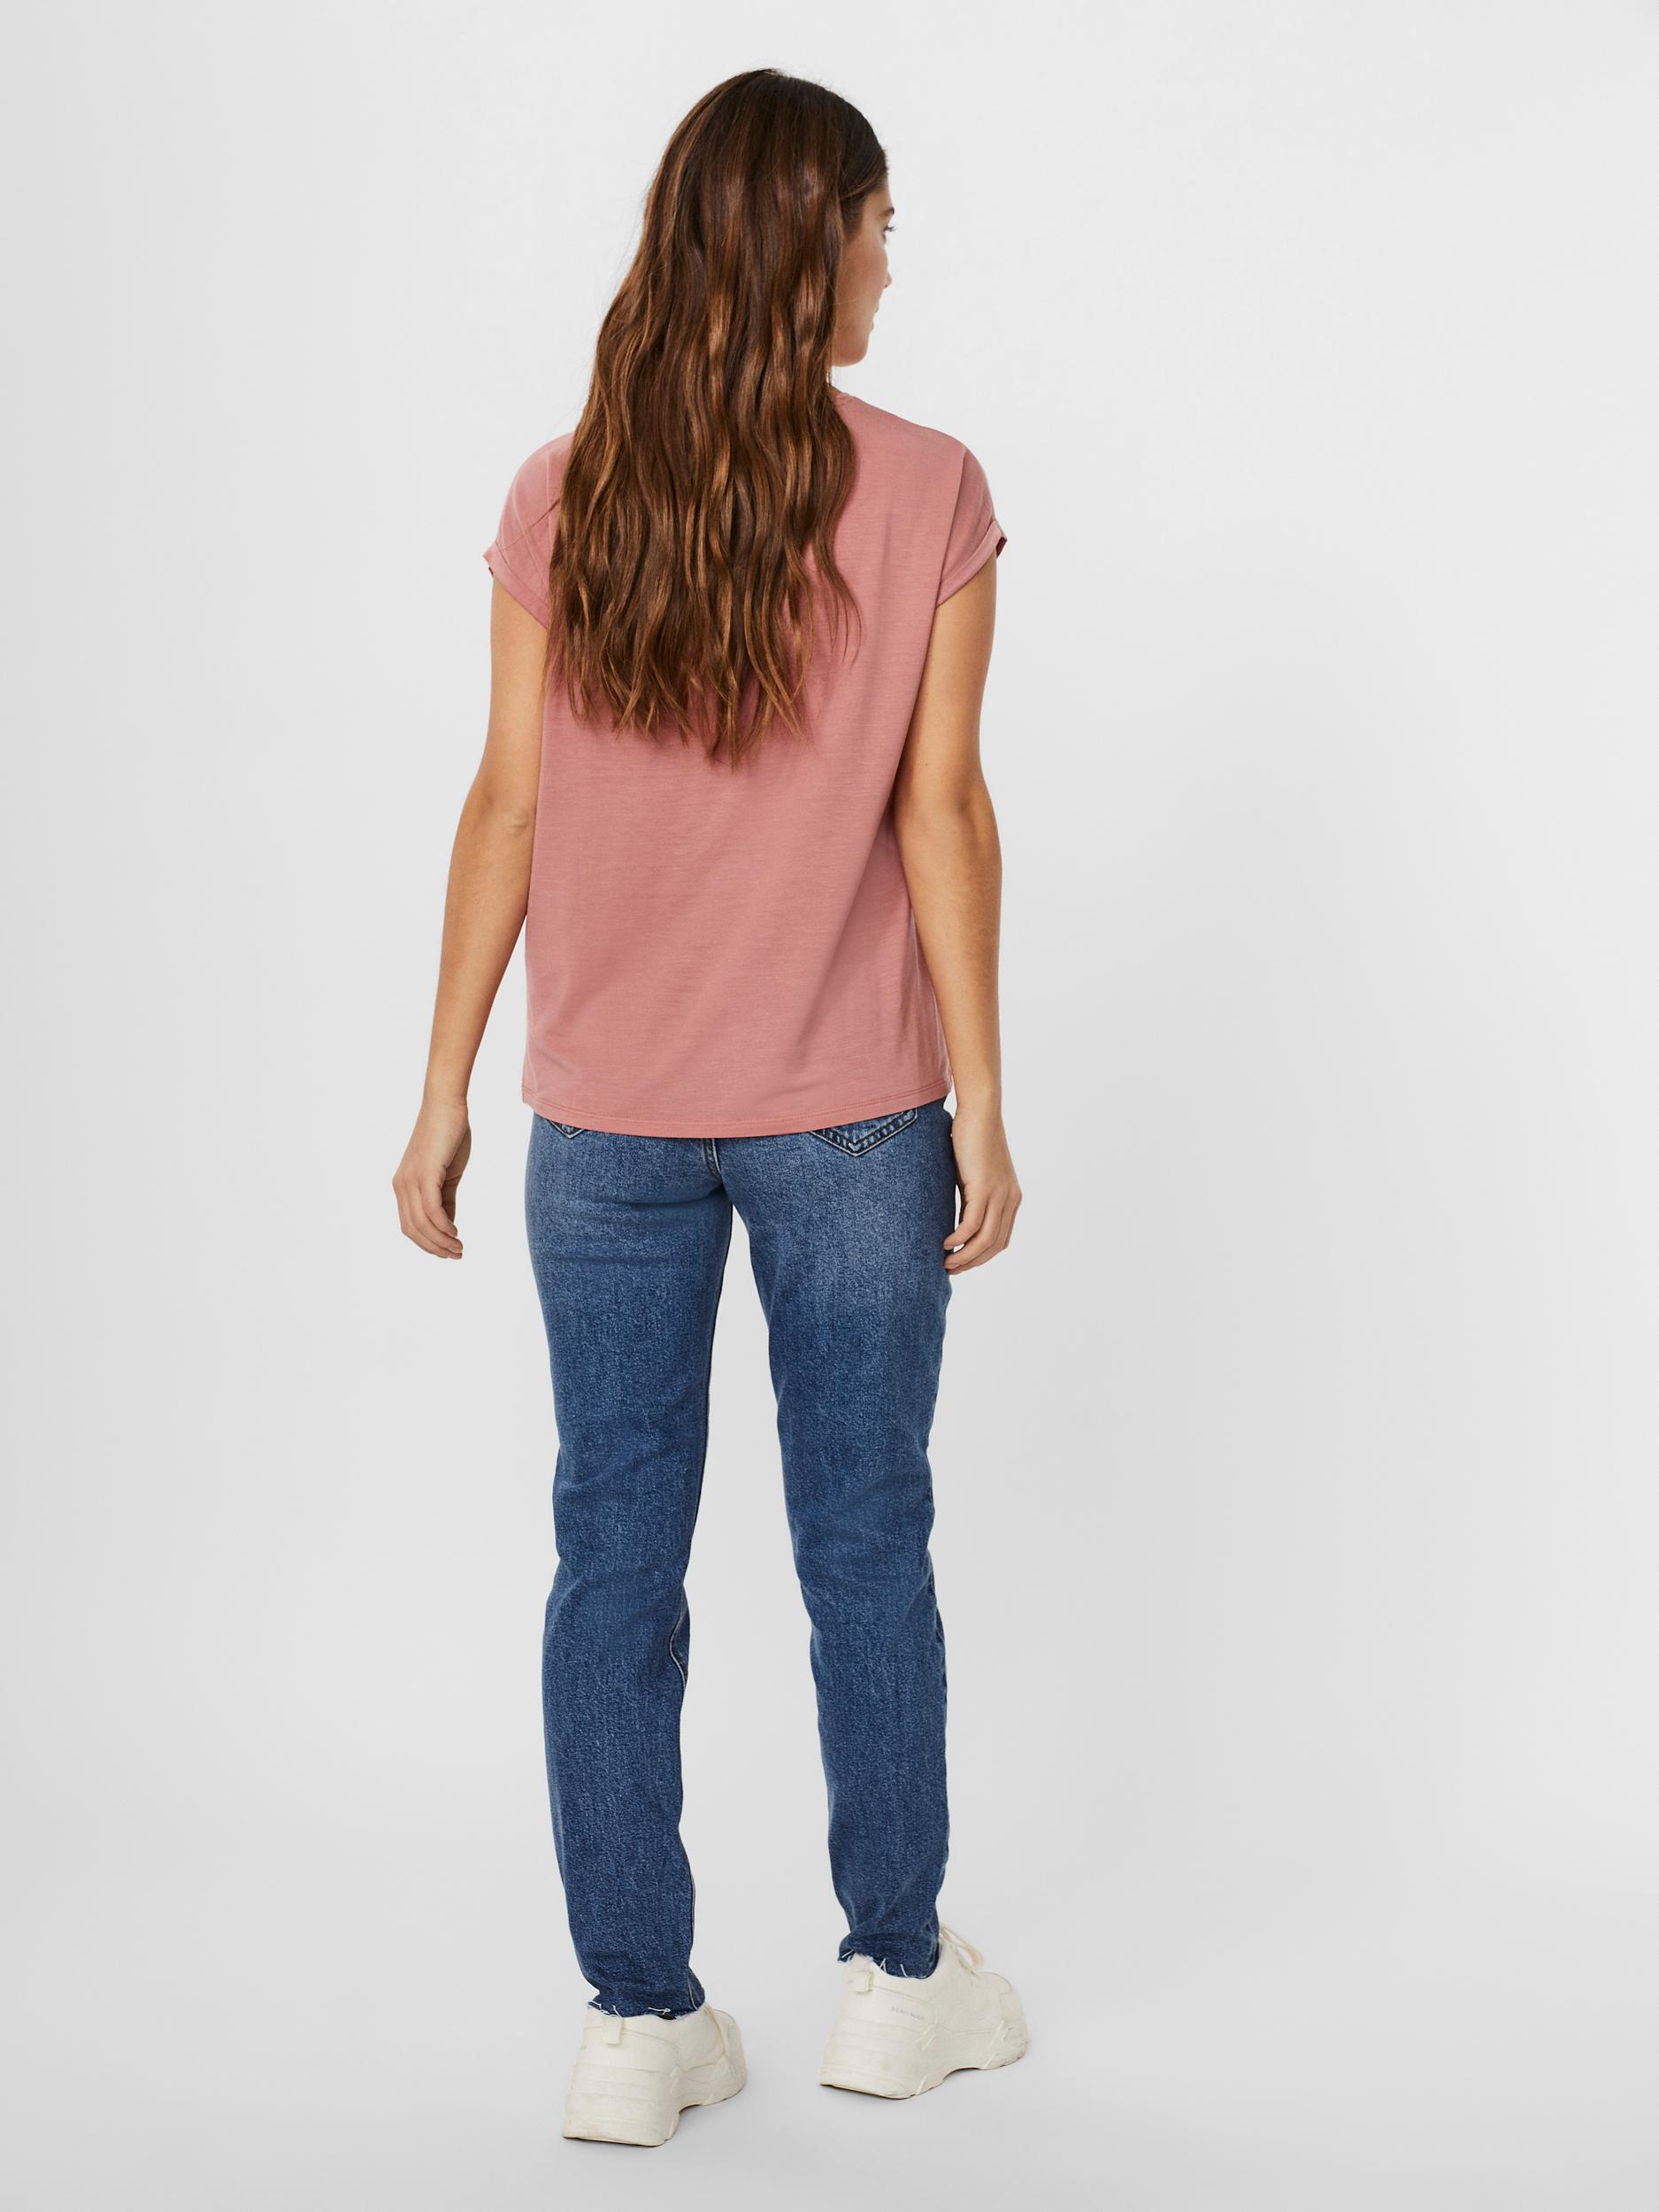 AWARE | Ava T-Shirt, OLD ROSE, large